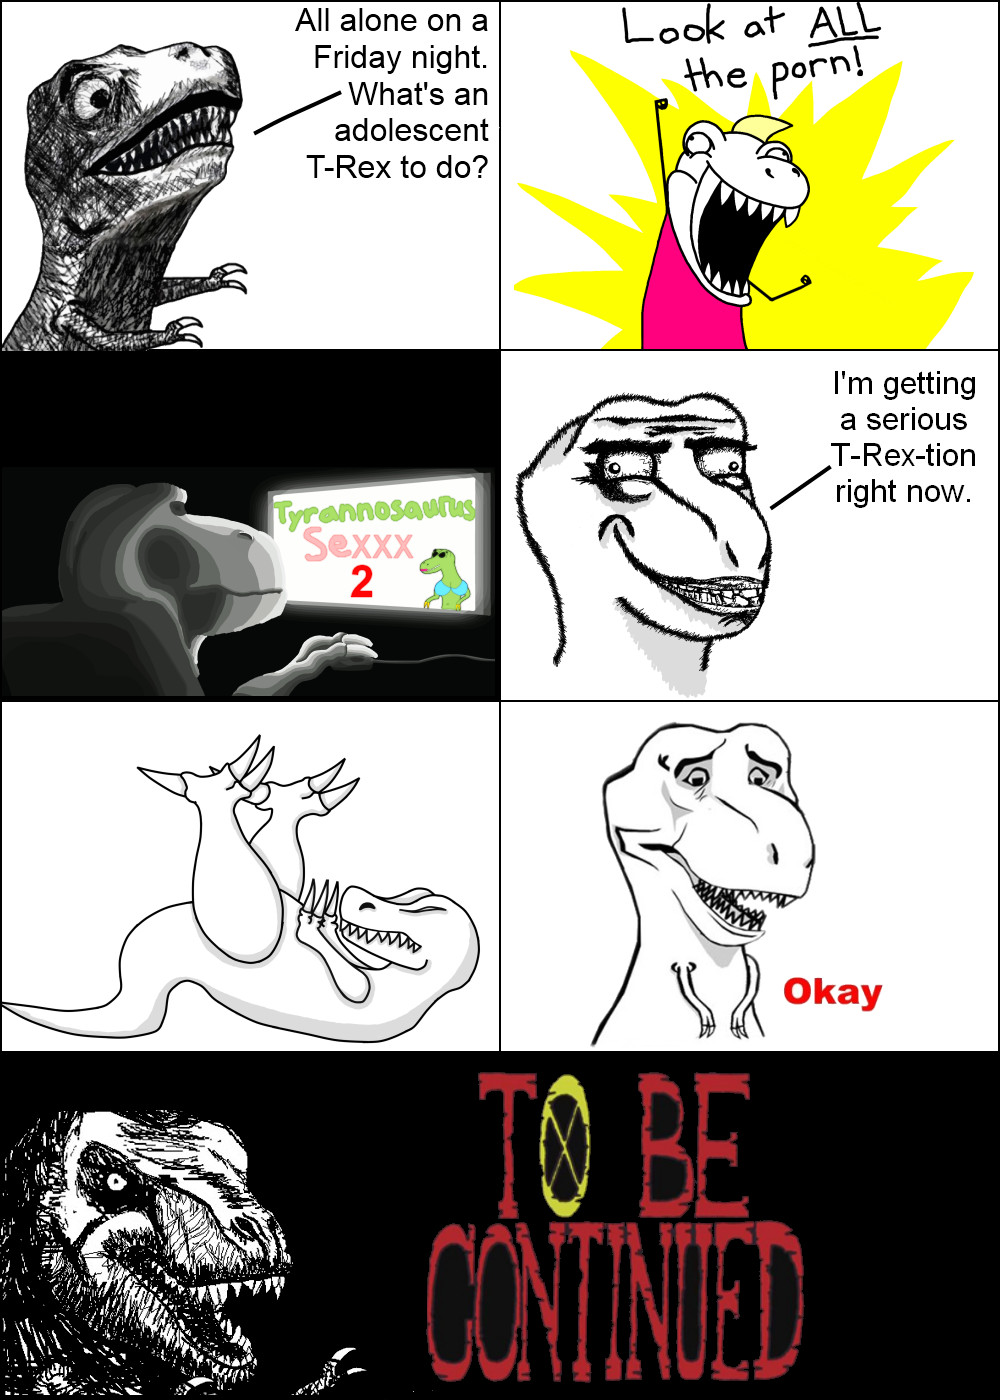 Jurassic World was amazing! - meme